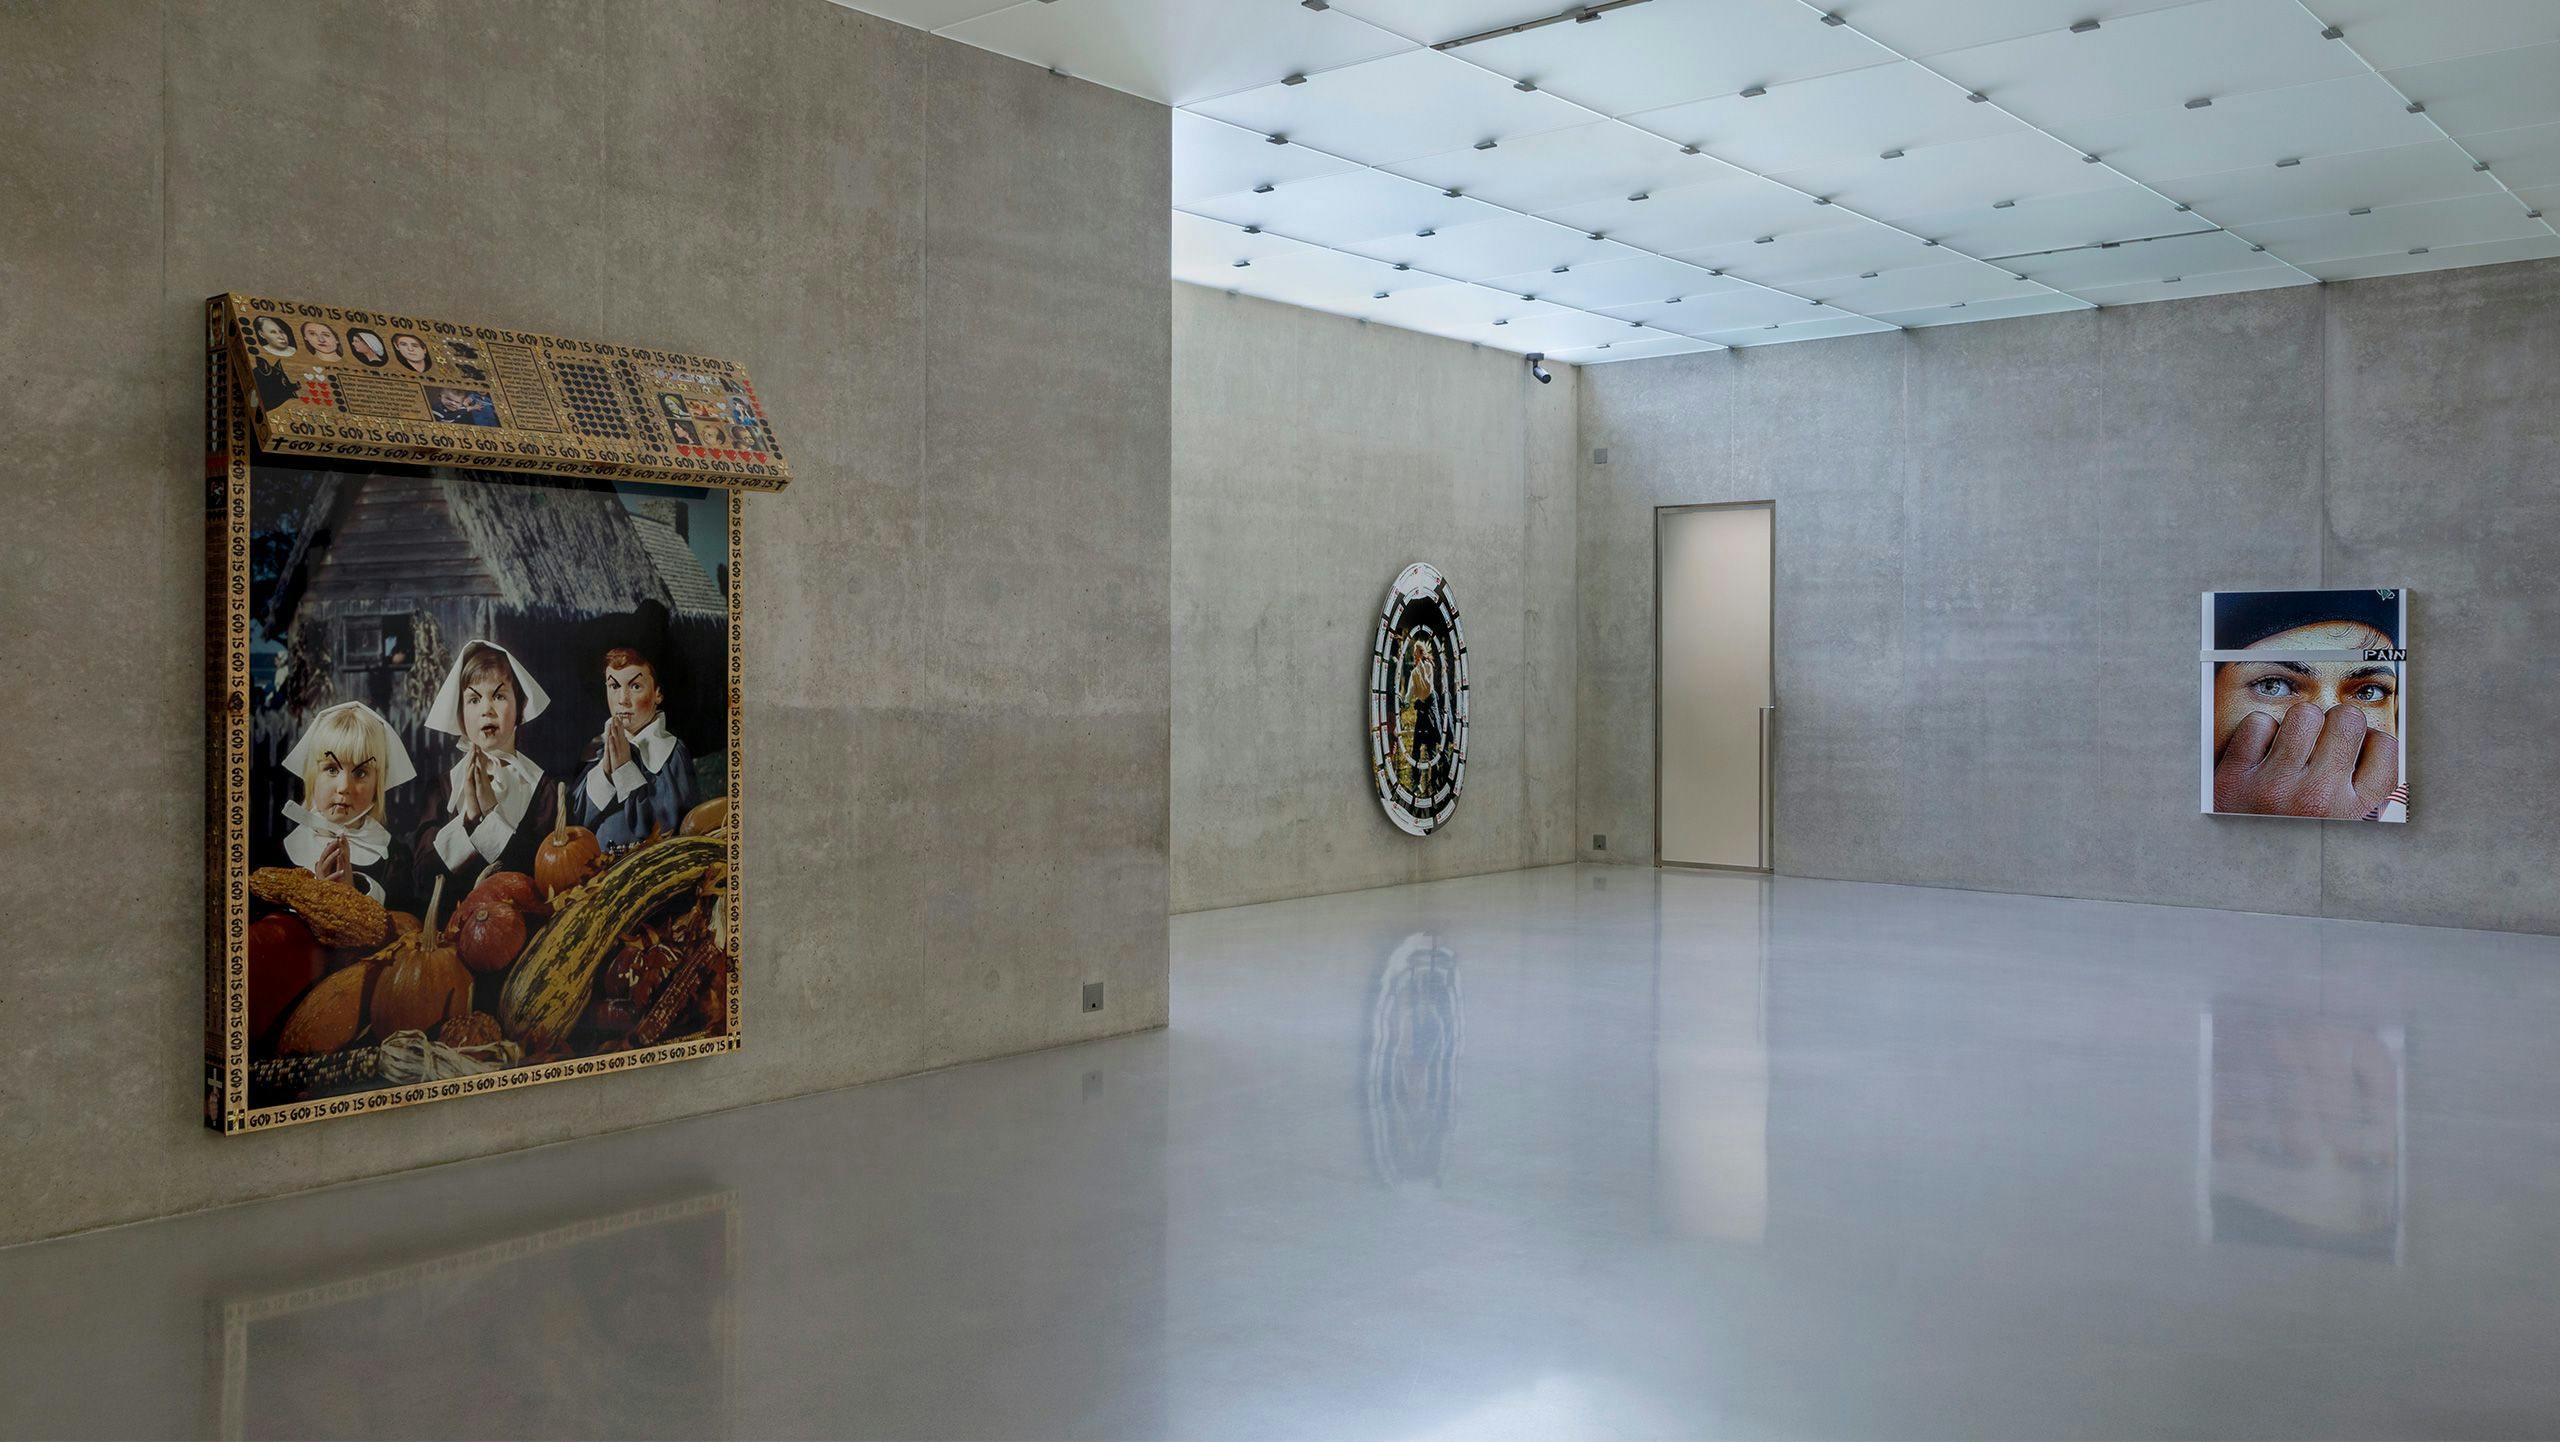 Installation view of the exhibition titled Jordan Wolfson at Kunsthaus Bregenz in Austria, dated 2022.